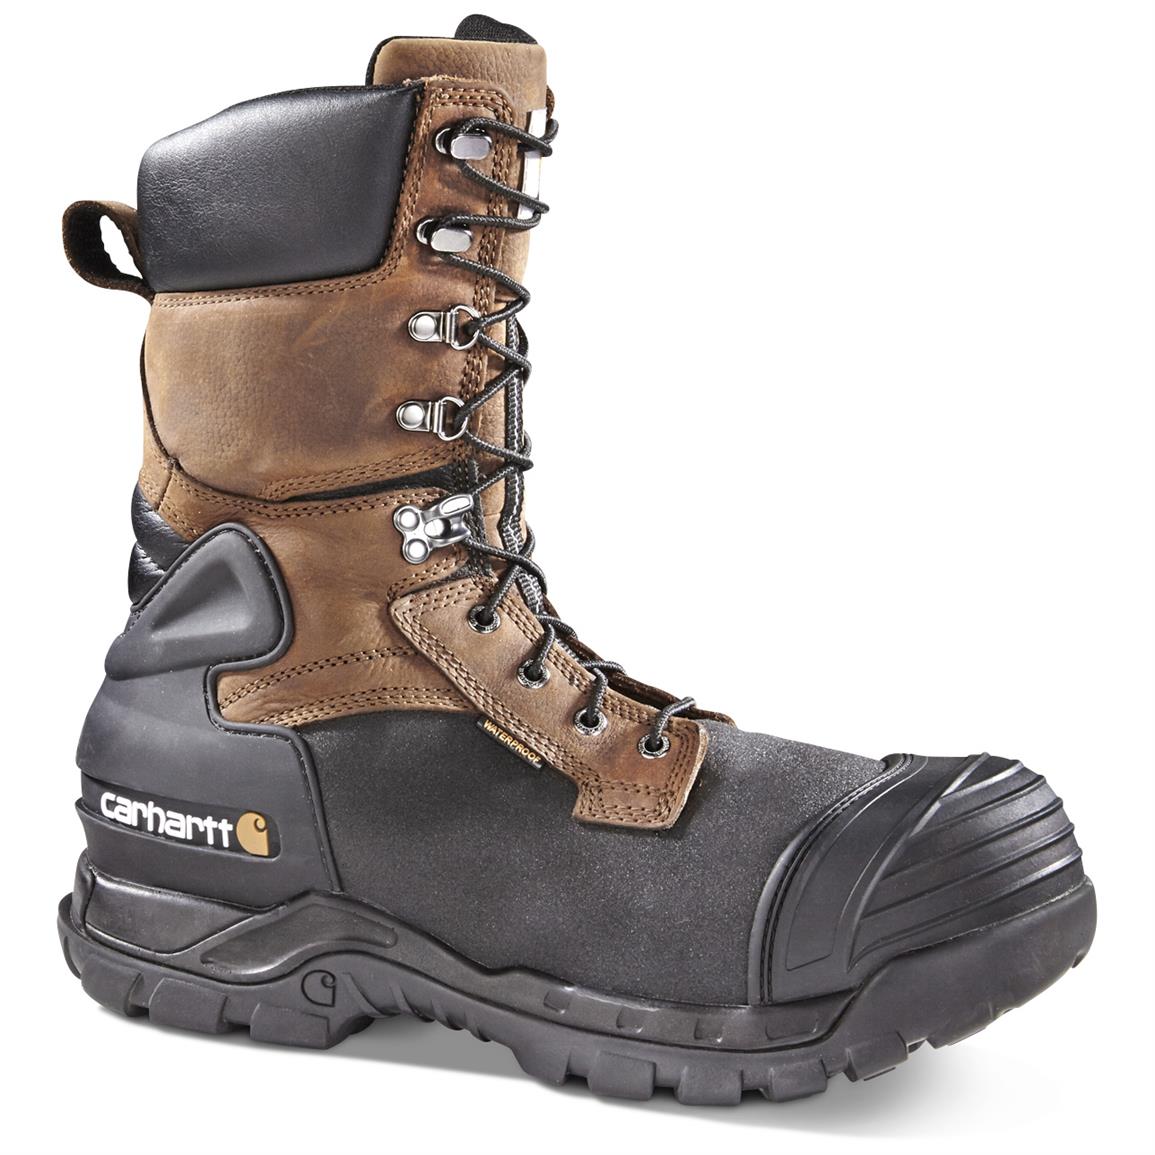 Carhartt Lightweight Waterproof Composite Toe Work Hiking Boots ...